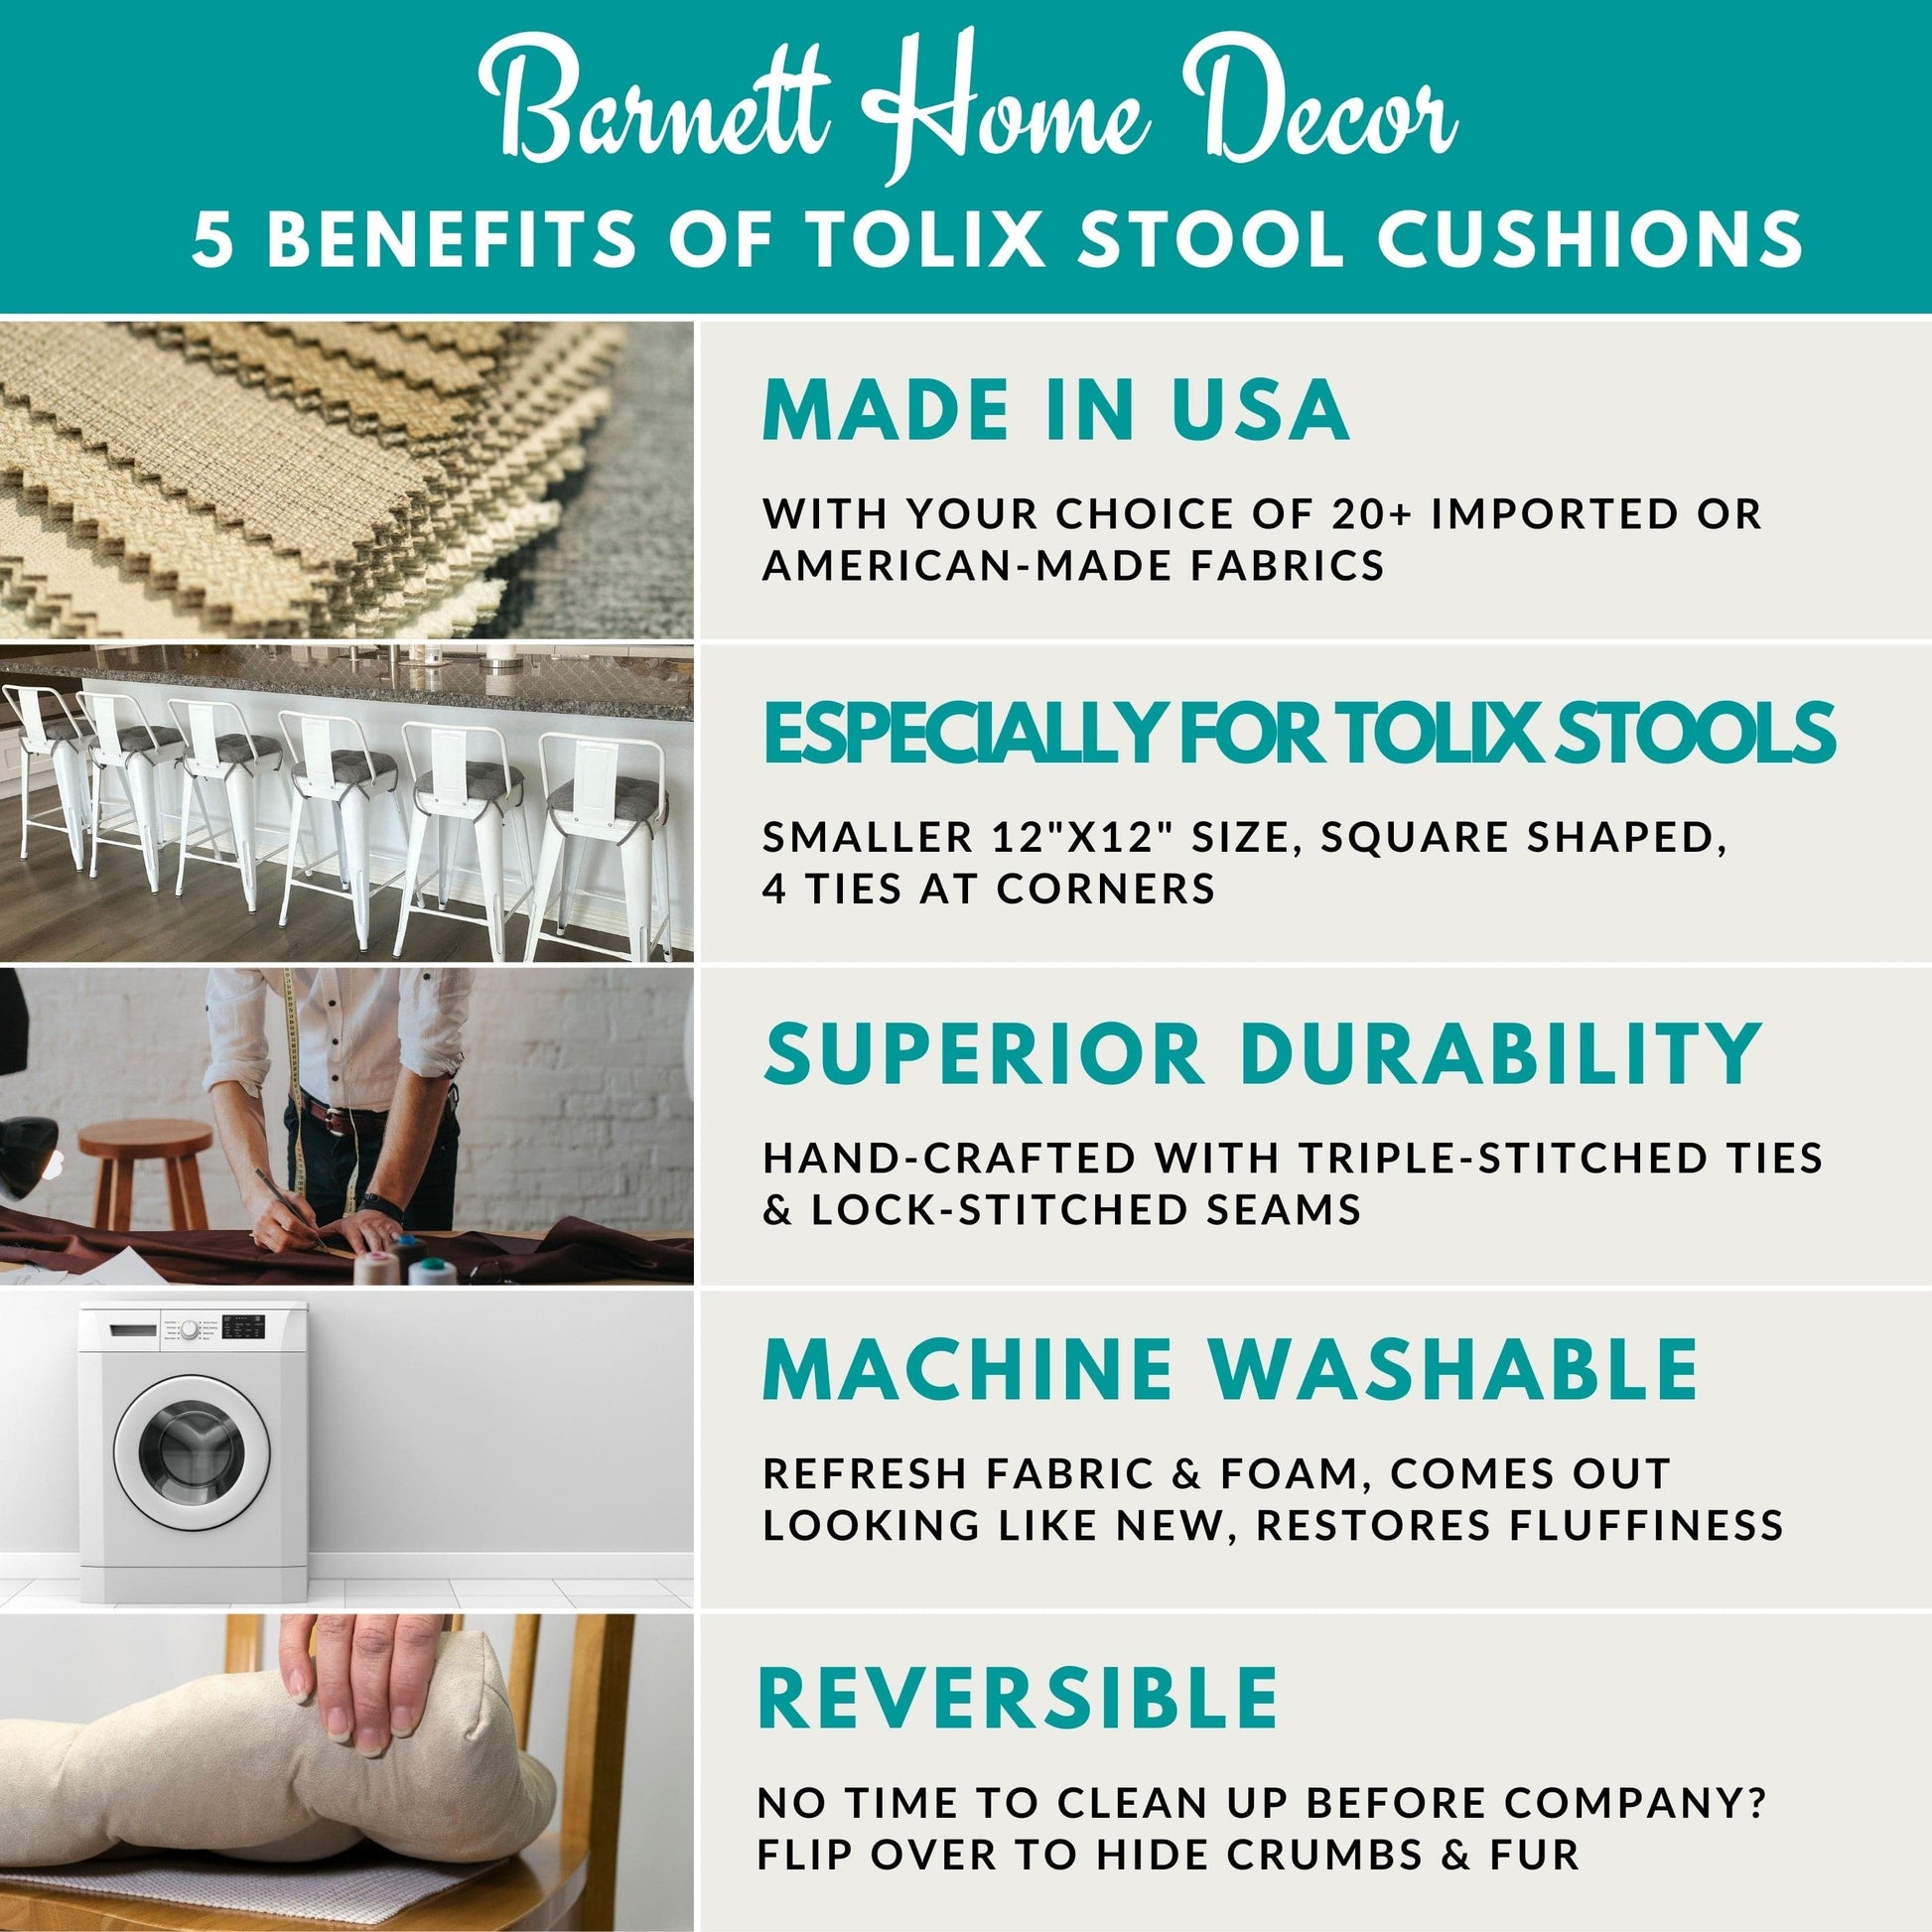 Barnett Home Decor - Benefits of Saddle Stool Cushions - Made in USA - Longer Ties - Superior Durability - Machine Washable